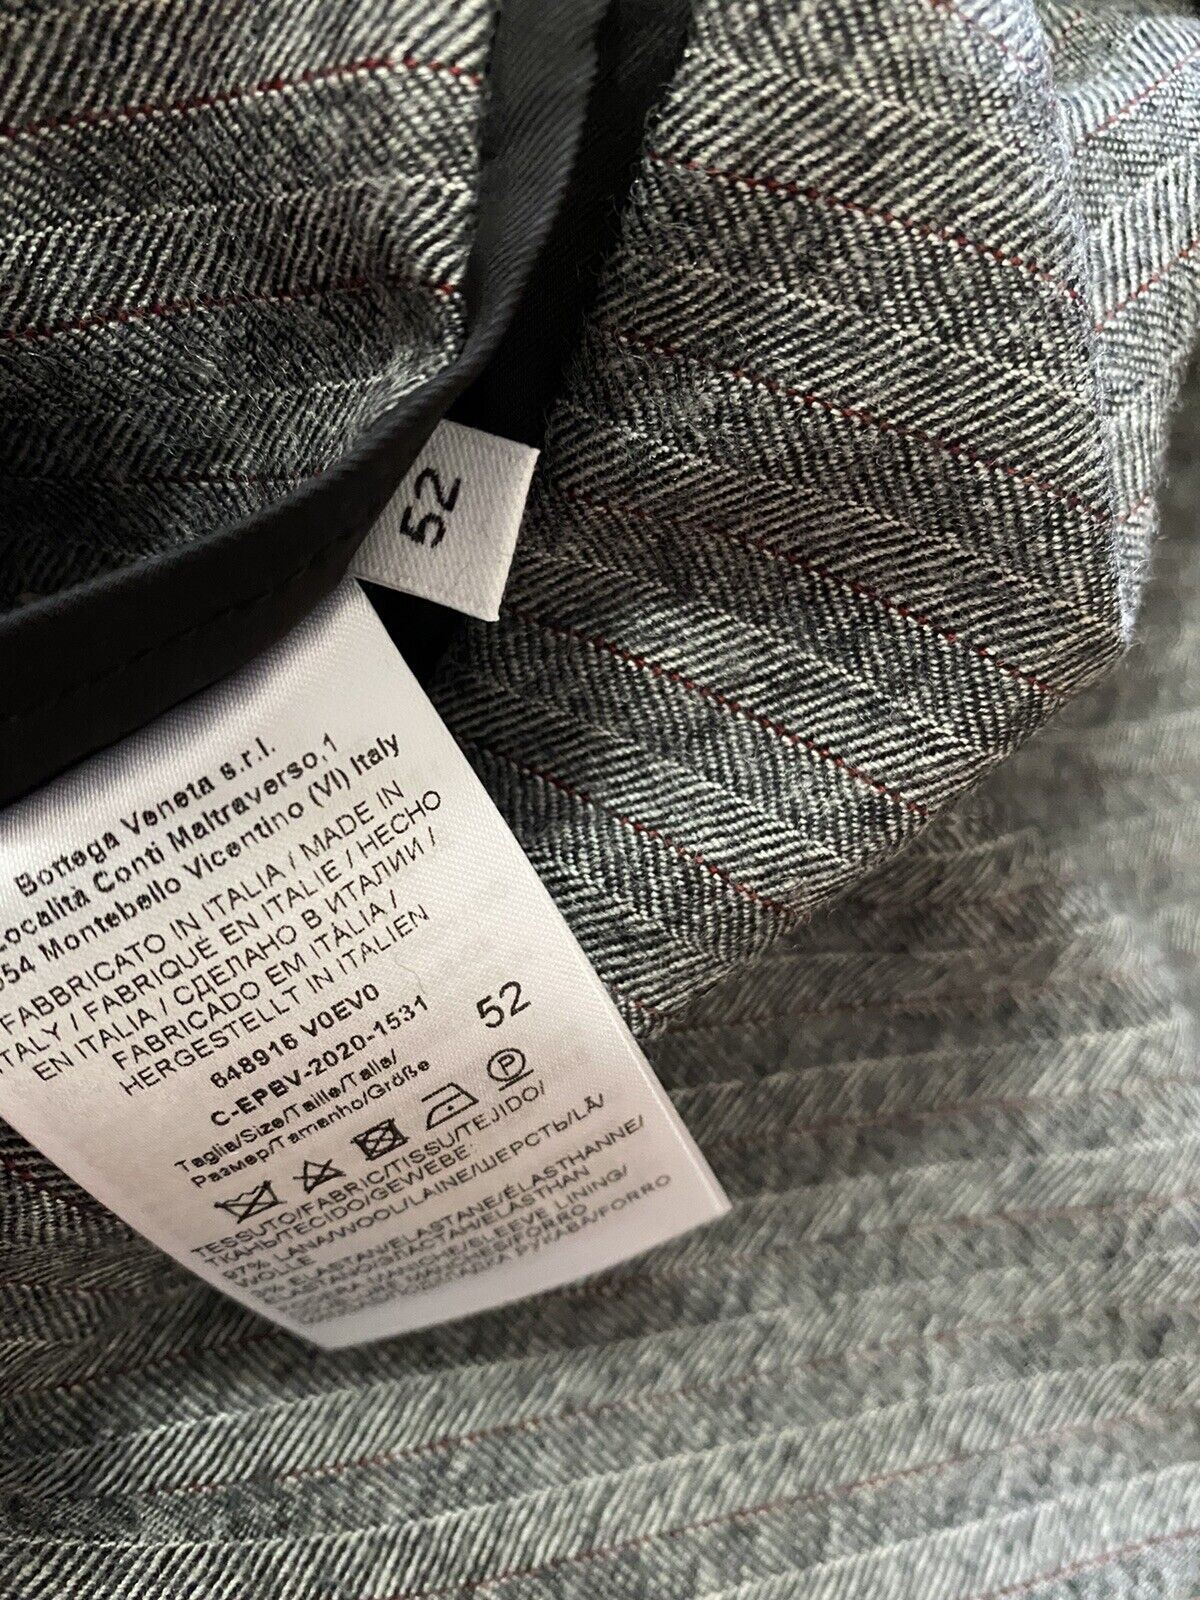 New $3500 Bottega Veneta Men Soft Wool Suit Gray 42R US/52R Eu Italy